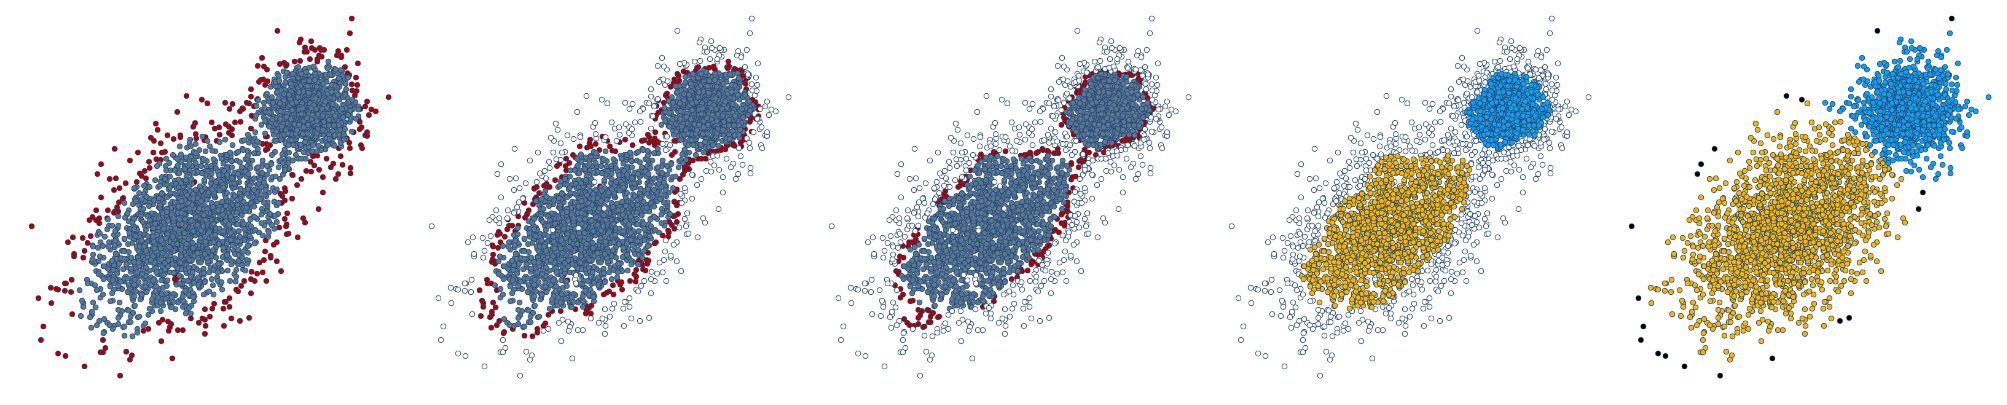 Illustration of Border-Peeling clustering